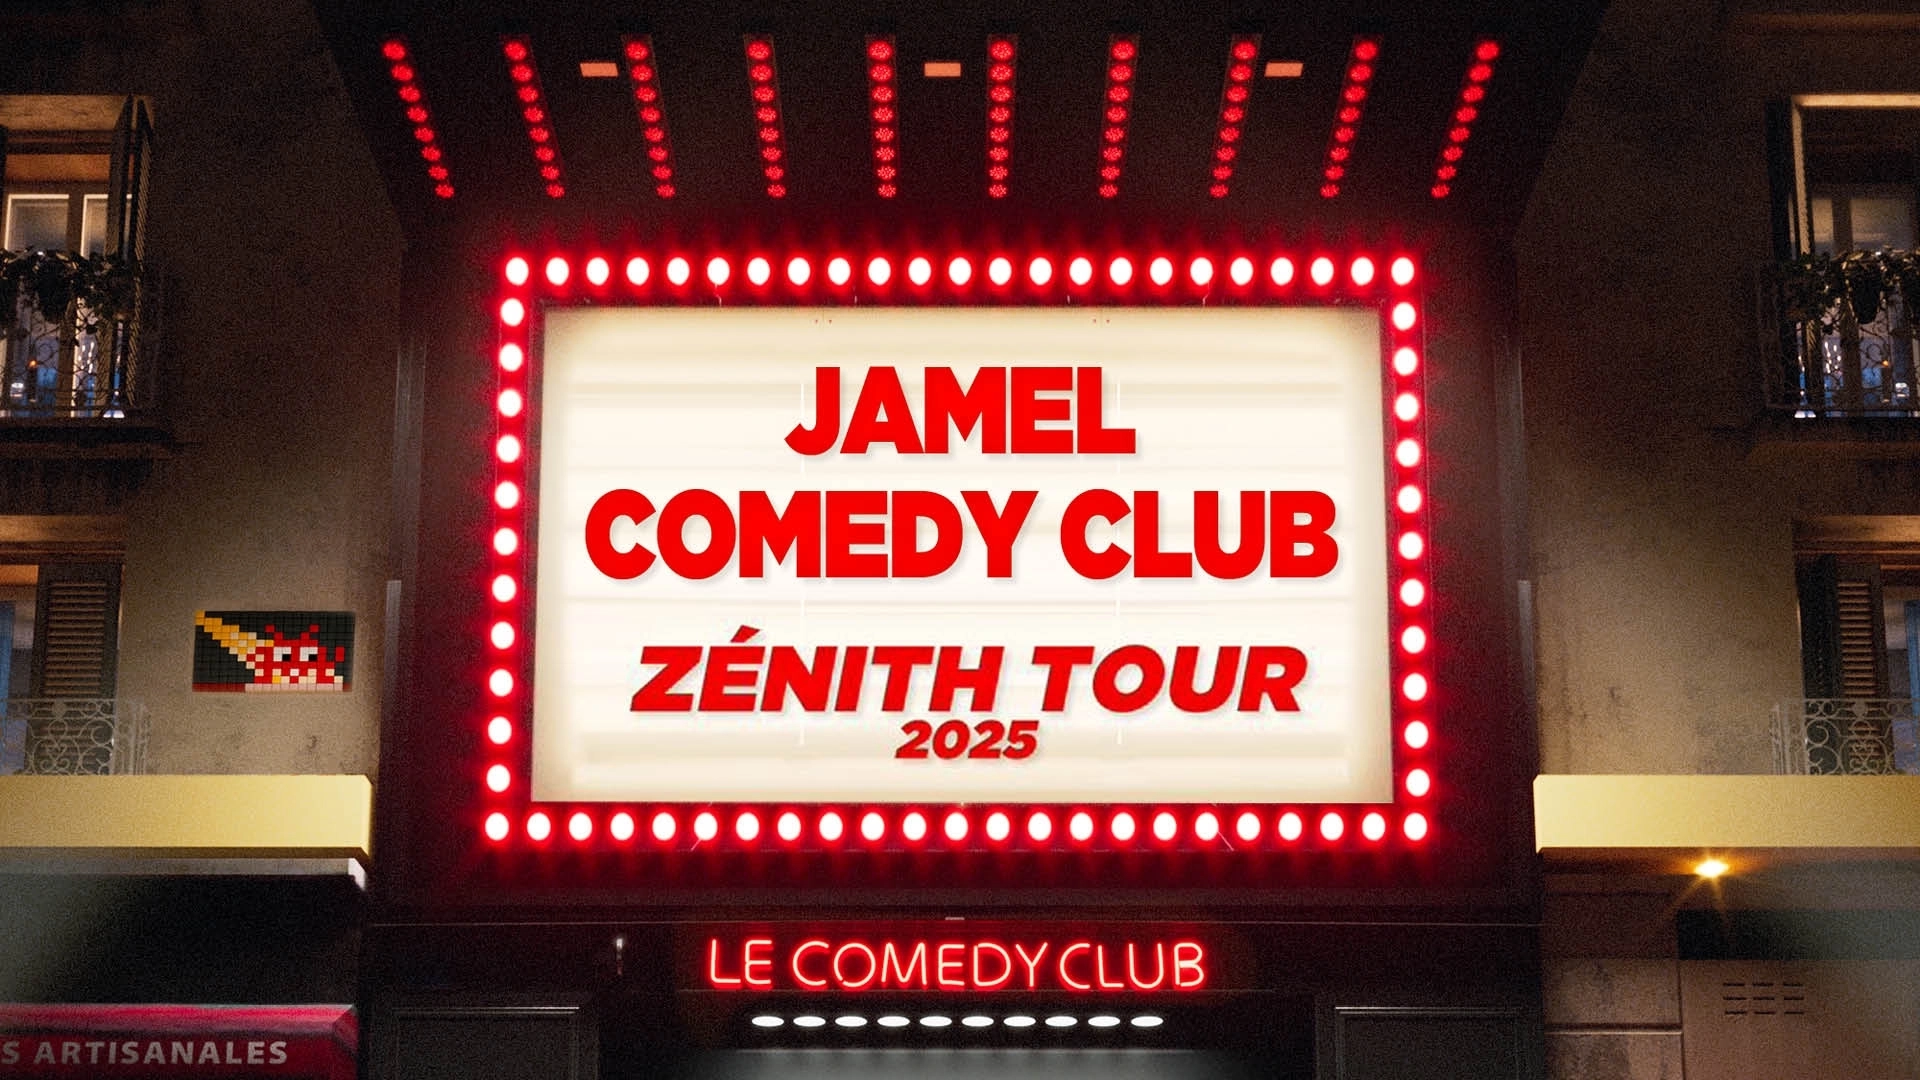 Jamel Comedy Club Zenith Tour 2025 at Geneva Arena Tickets